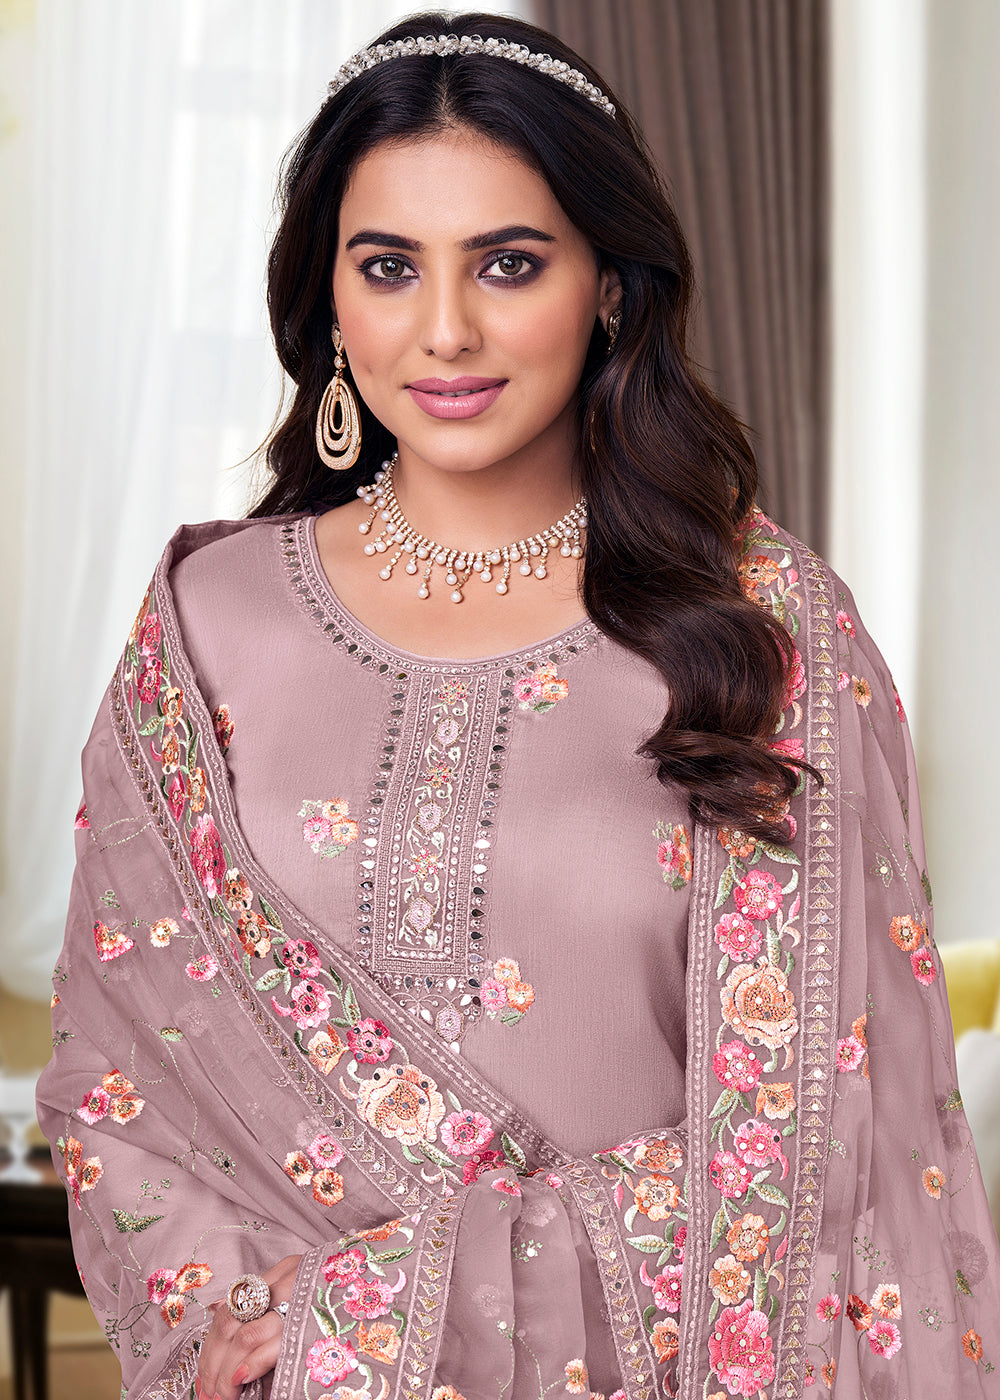 Buy Now Viscose Silk Old Rose Purple Embroidered Salwar Kameez Online in USA, UK, Canada & Worldwide at Empress Clothing.